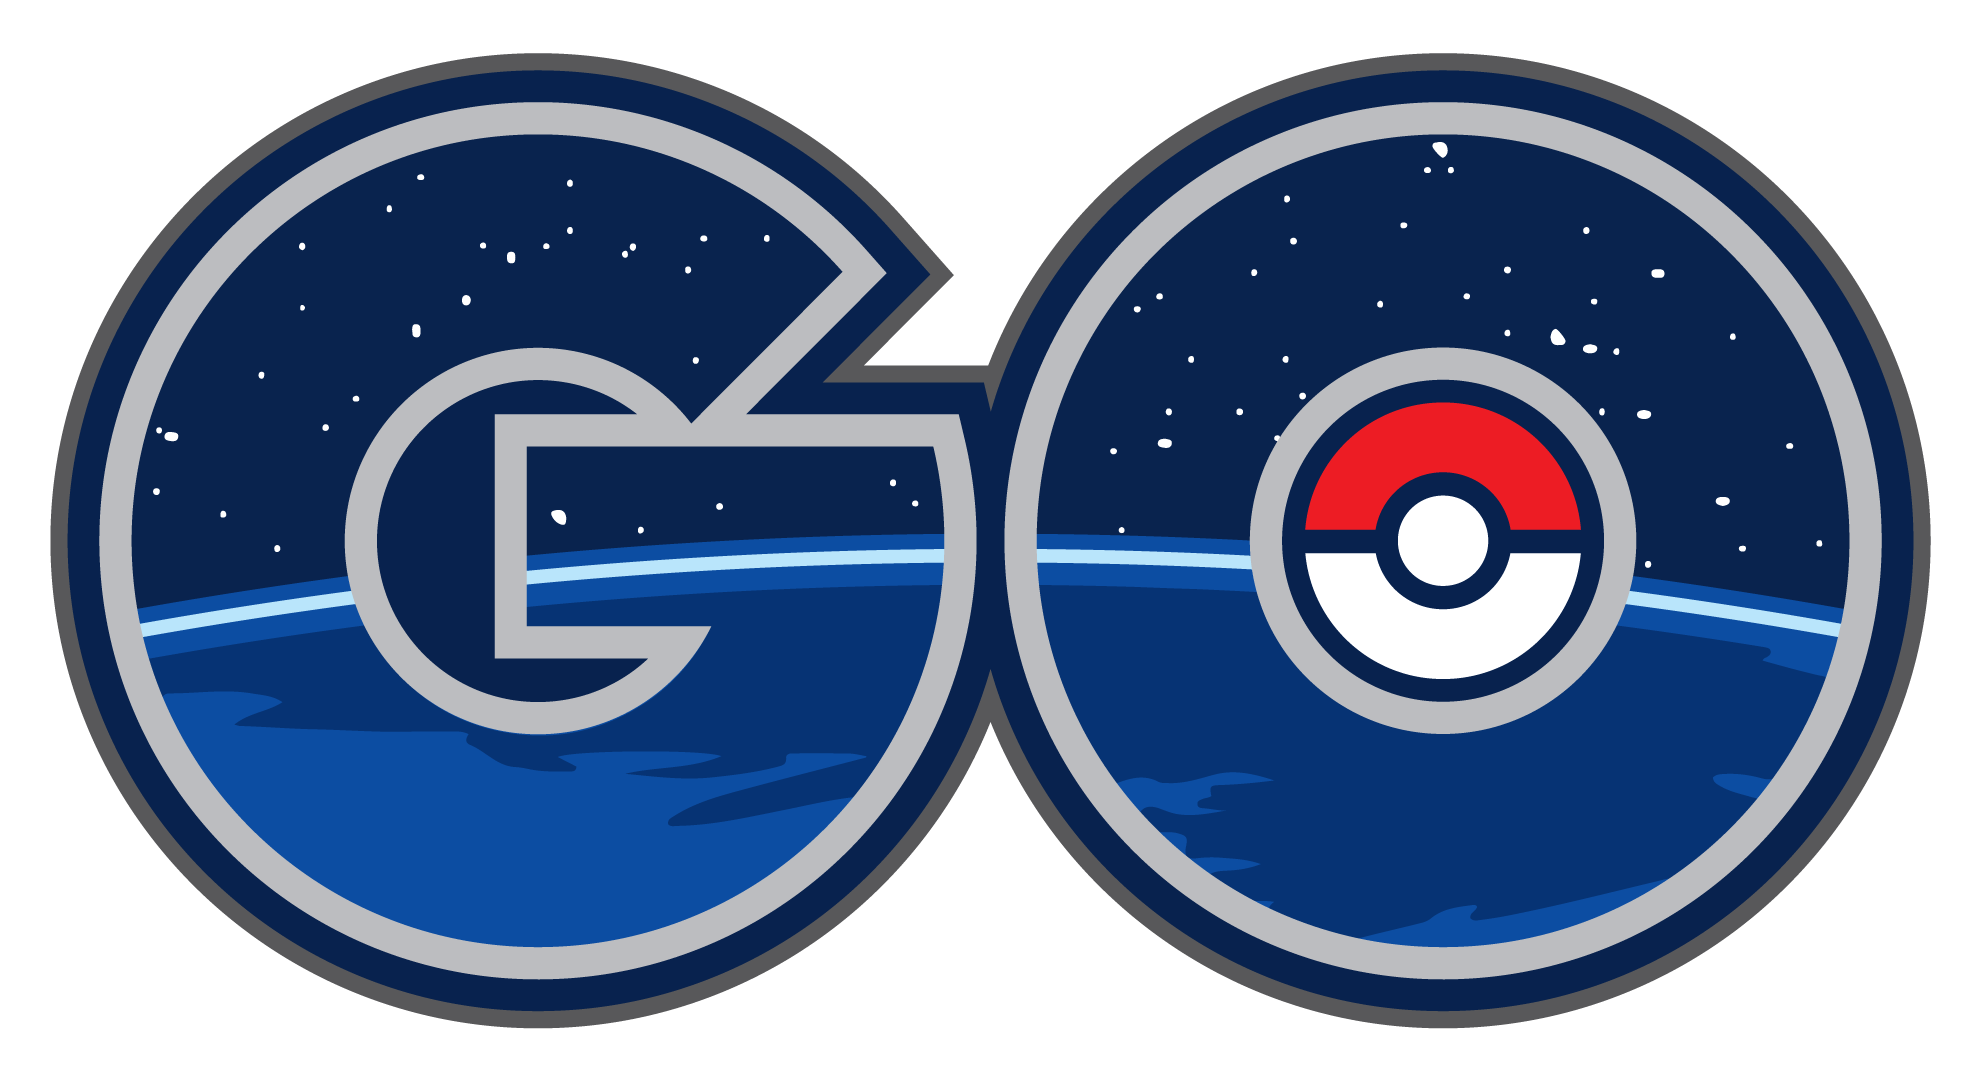 Pokemon Go Logo PNG-PlusPNG.c